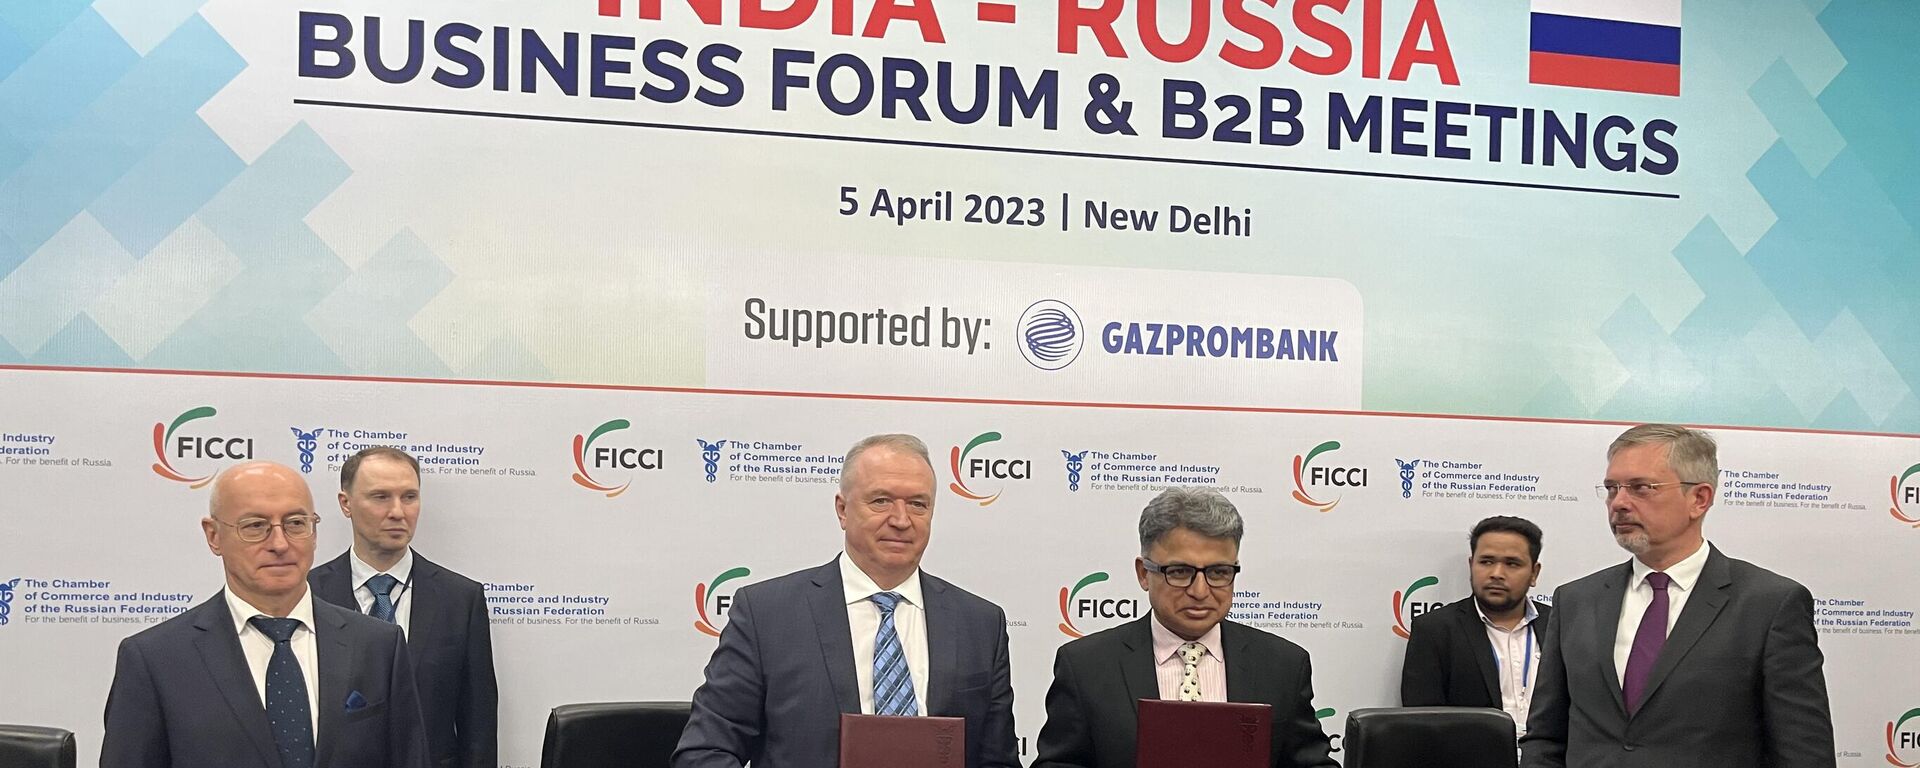 India-Russia Business Forum in New Delhi, April 2023 - Sputnik India, 1920, 07.04.2023